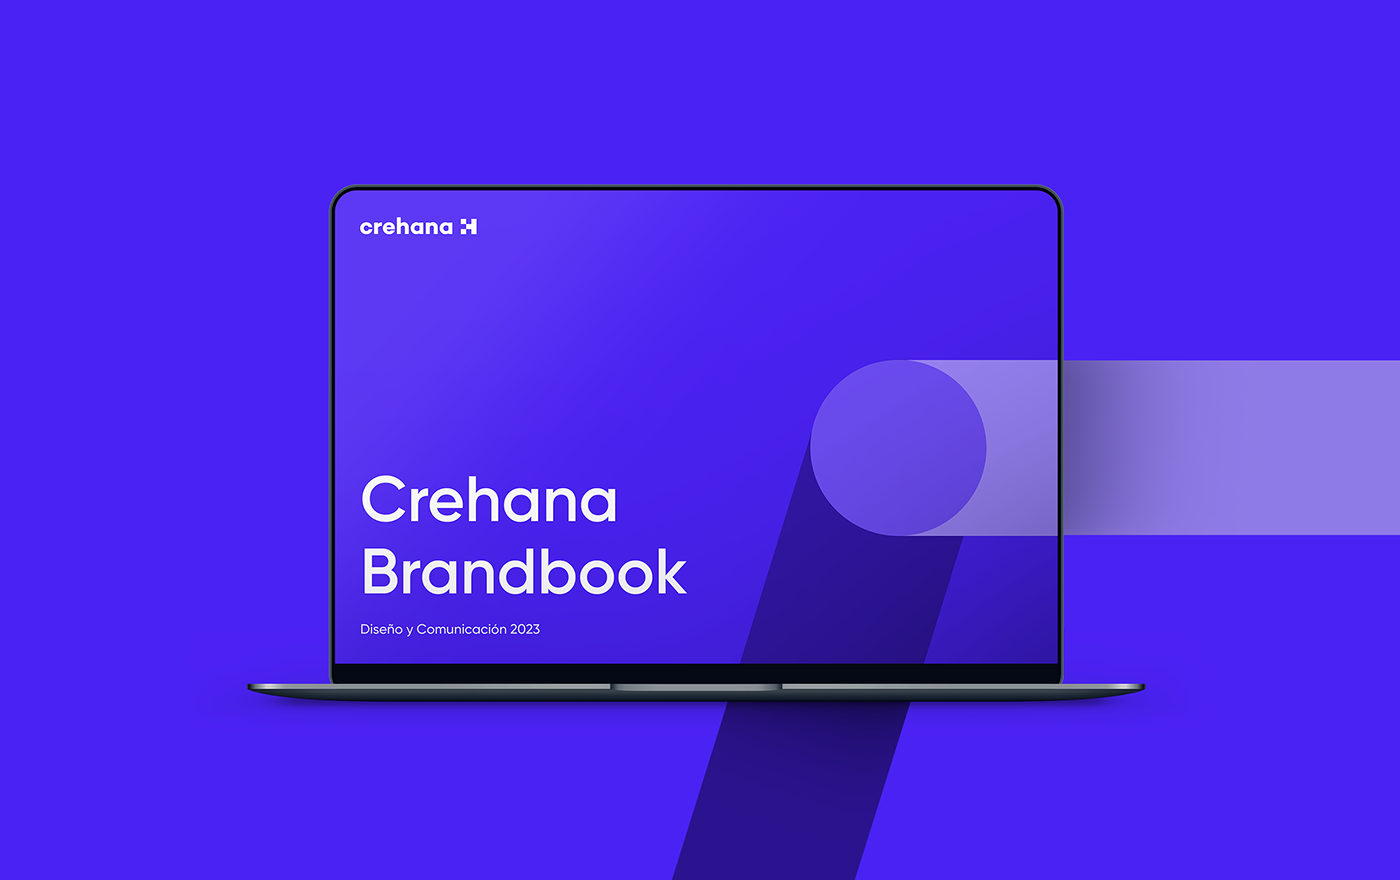 branding  brandbook brand guidelines crehana brand identity Guidelines design grid system visual identity Manual de Marca eLearning